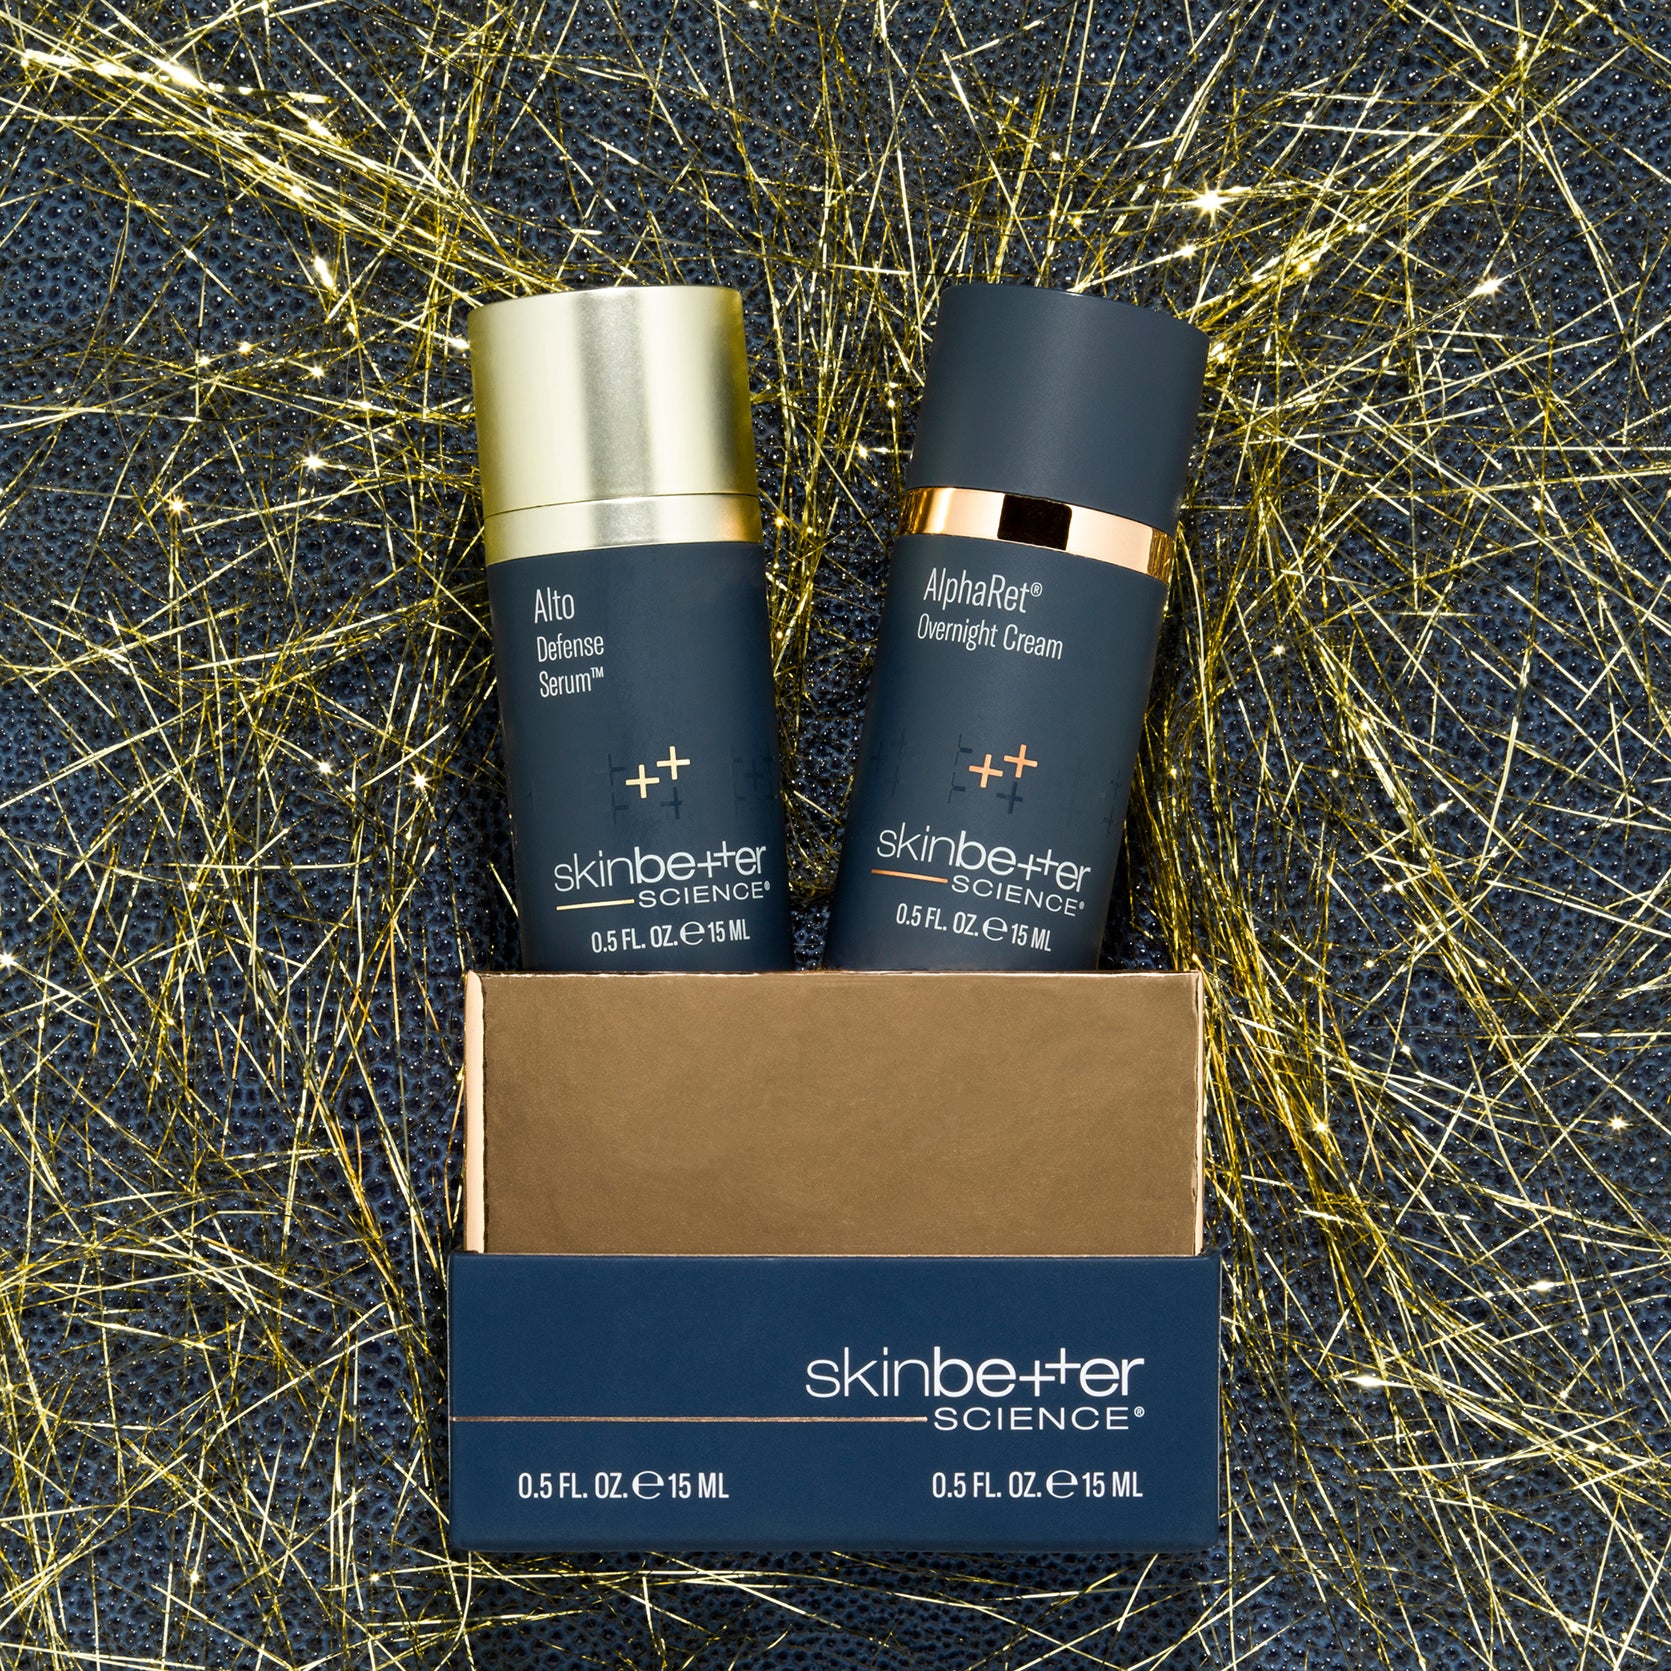 Skinbetter Science | A Team Duo Kit (Alto Defense Serum + AlphaRet Overnight Cream)